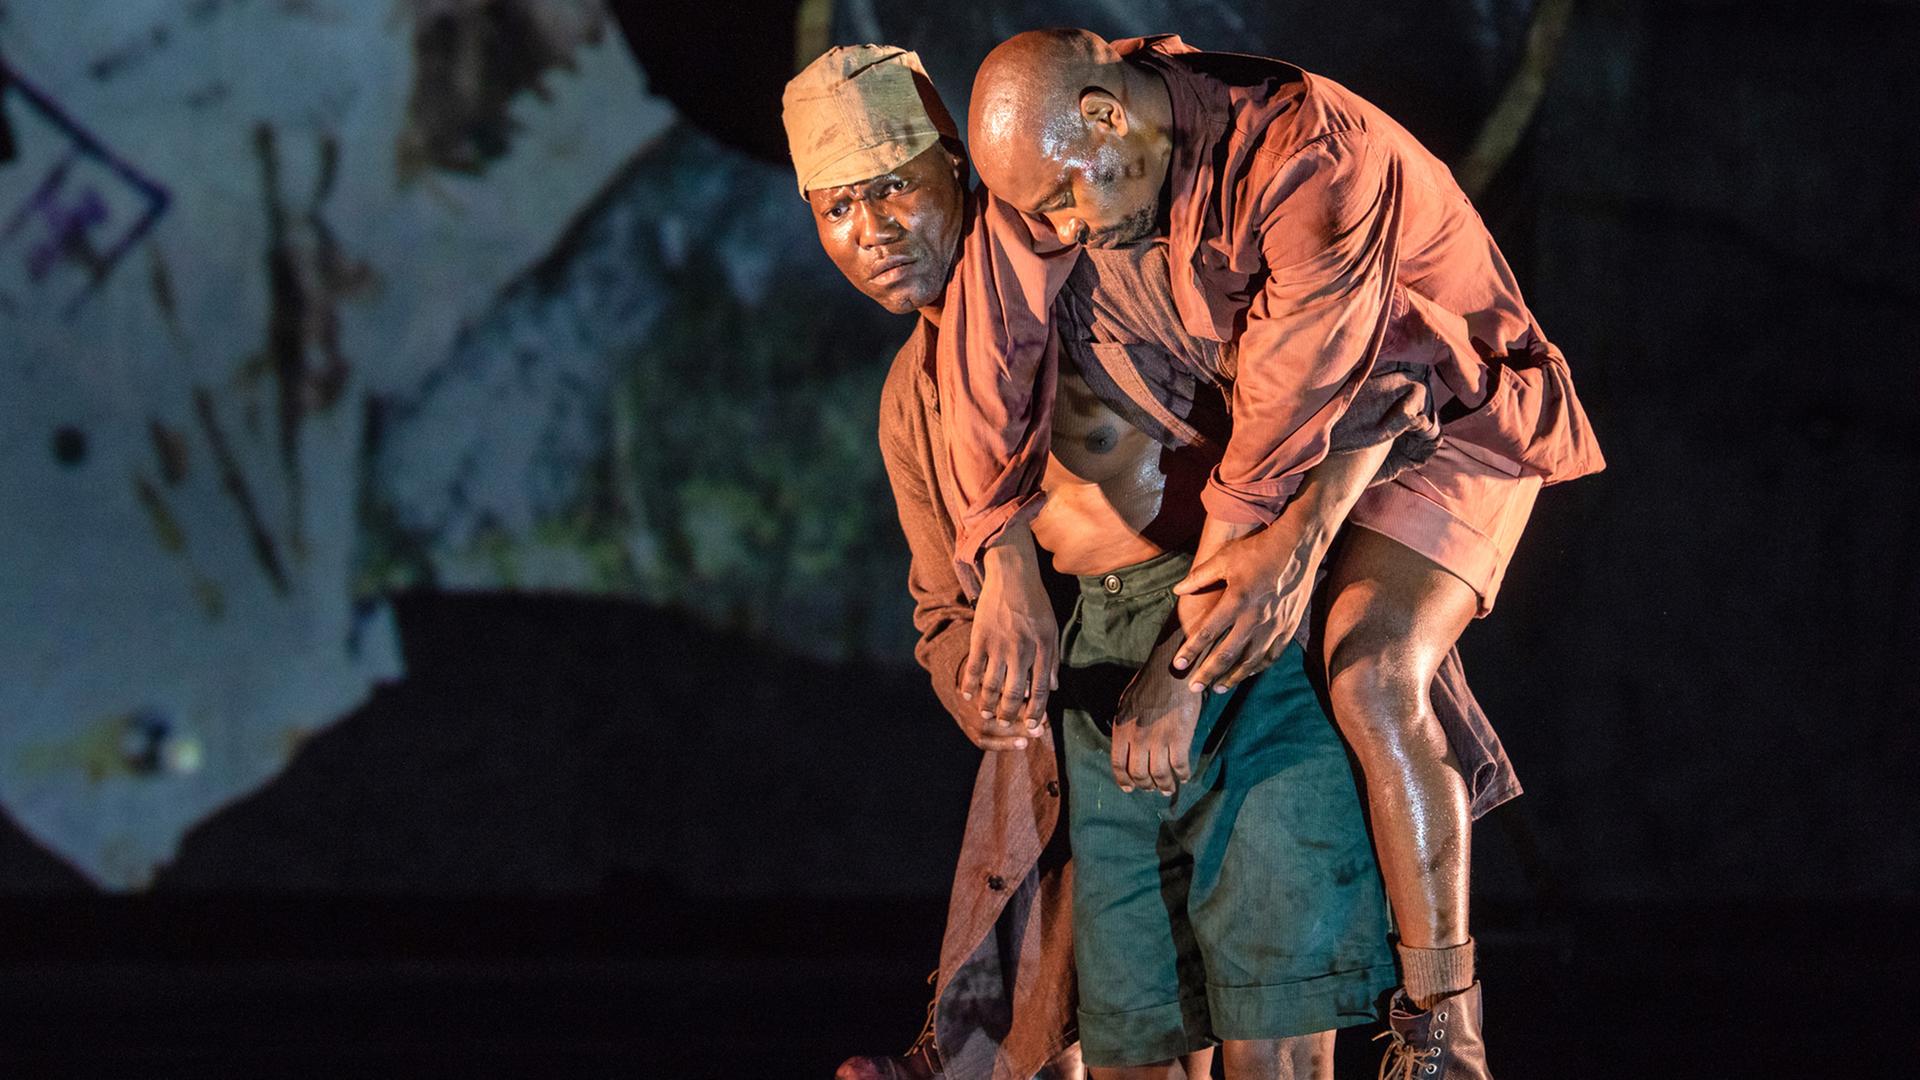 Szene aus dem Musiktheater "The Head an the Load" des südafrikanischen Regisseurs William Kentridge